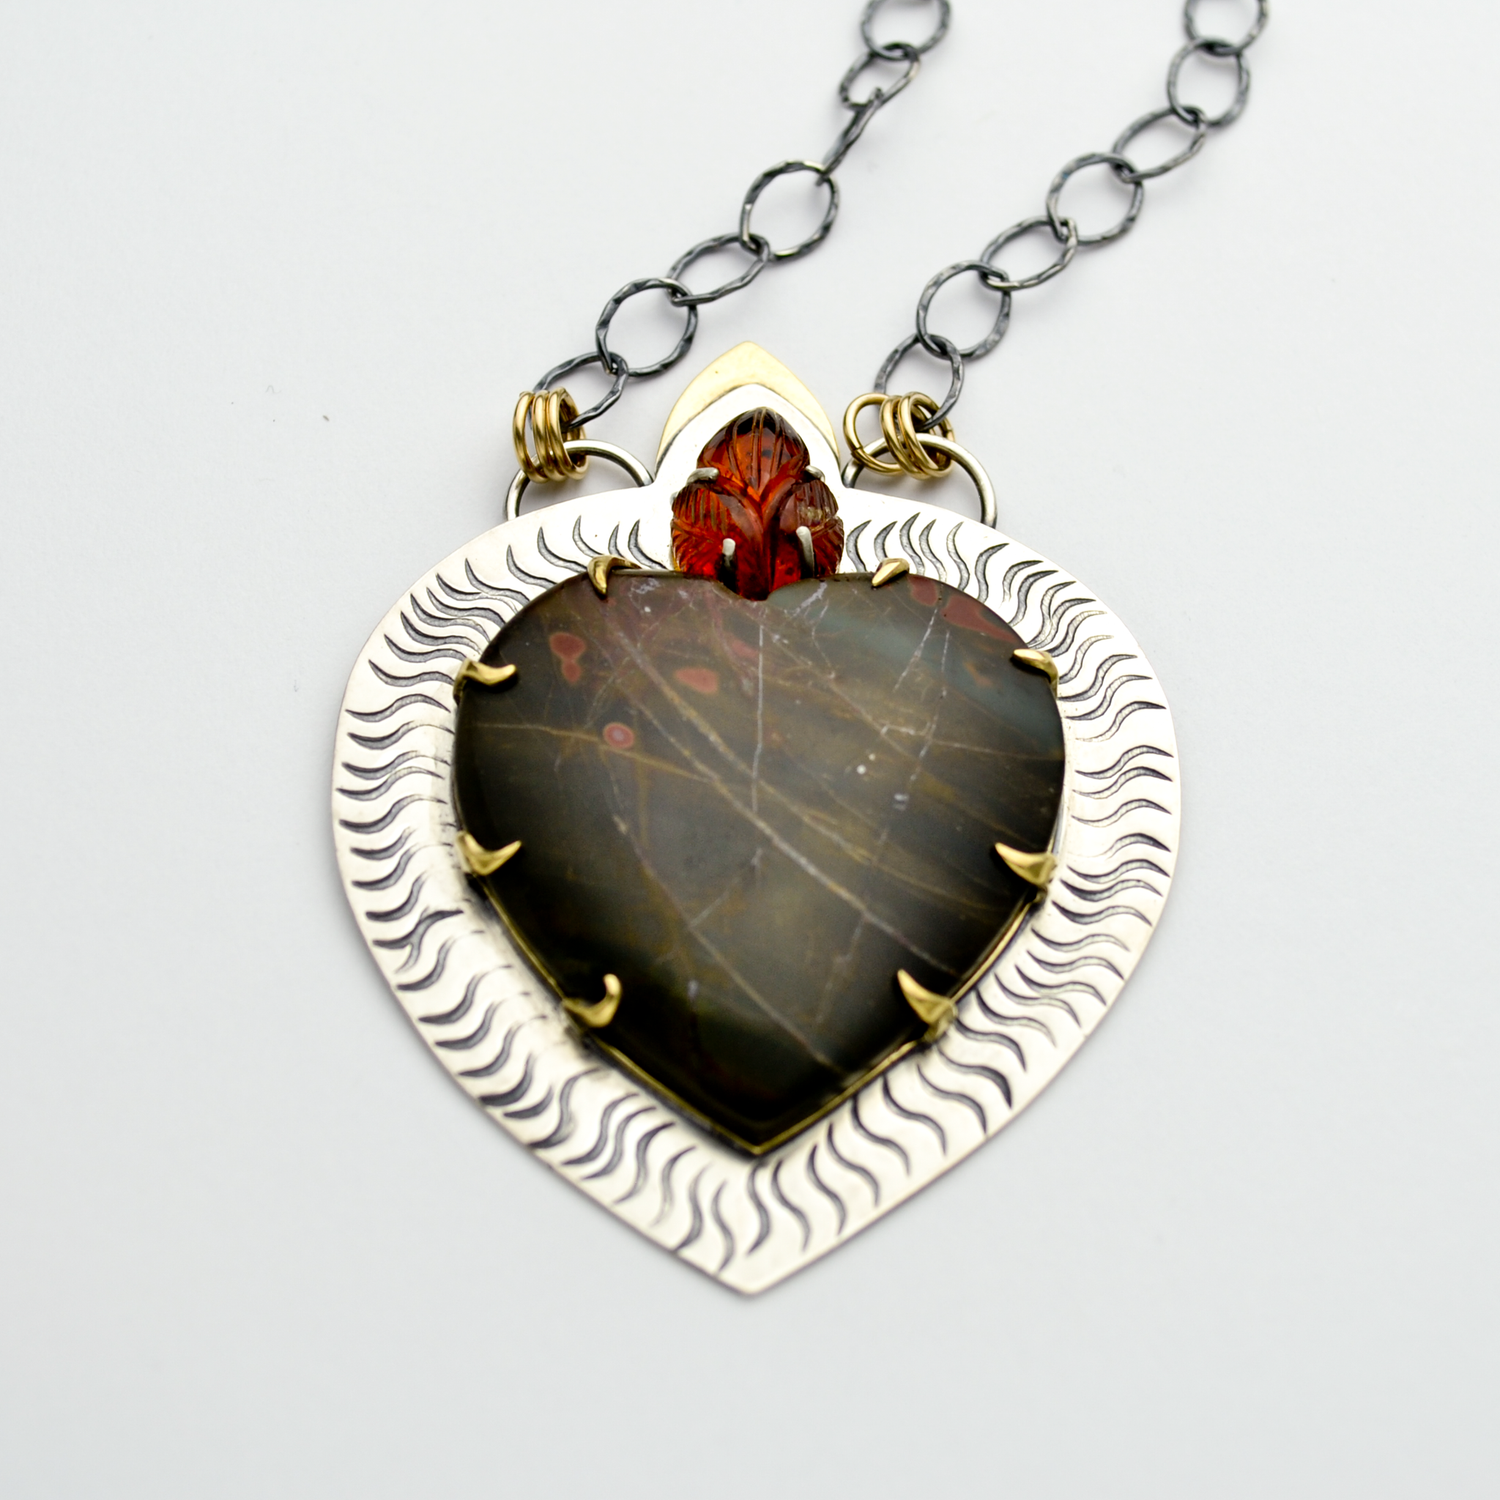 Christian Heart Jewelry